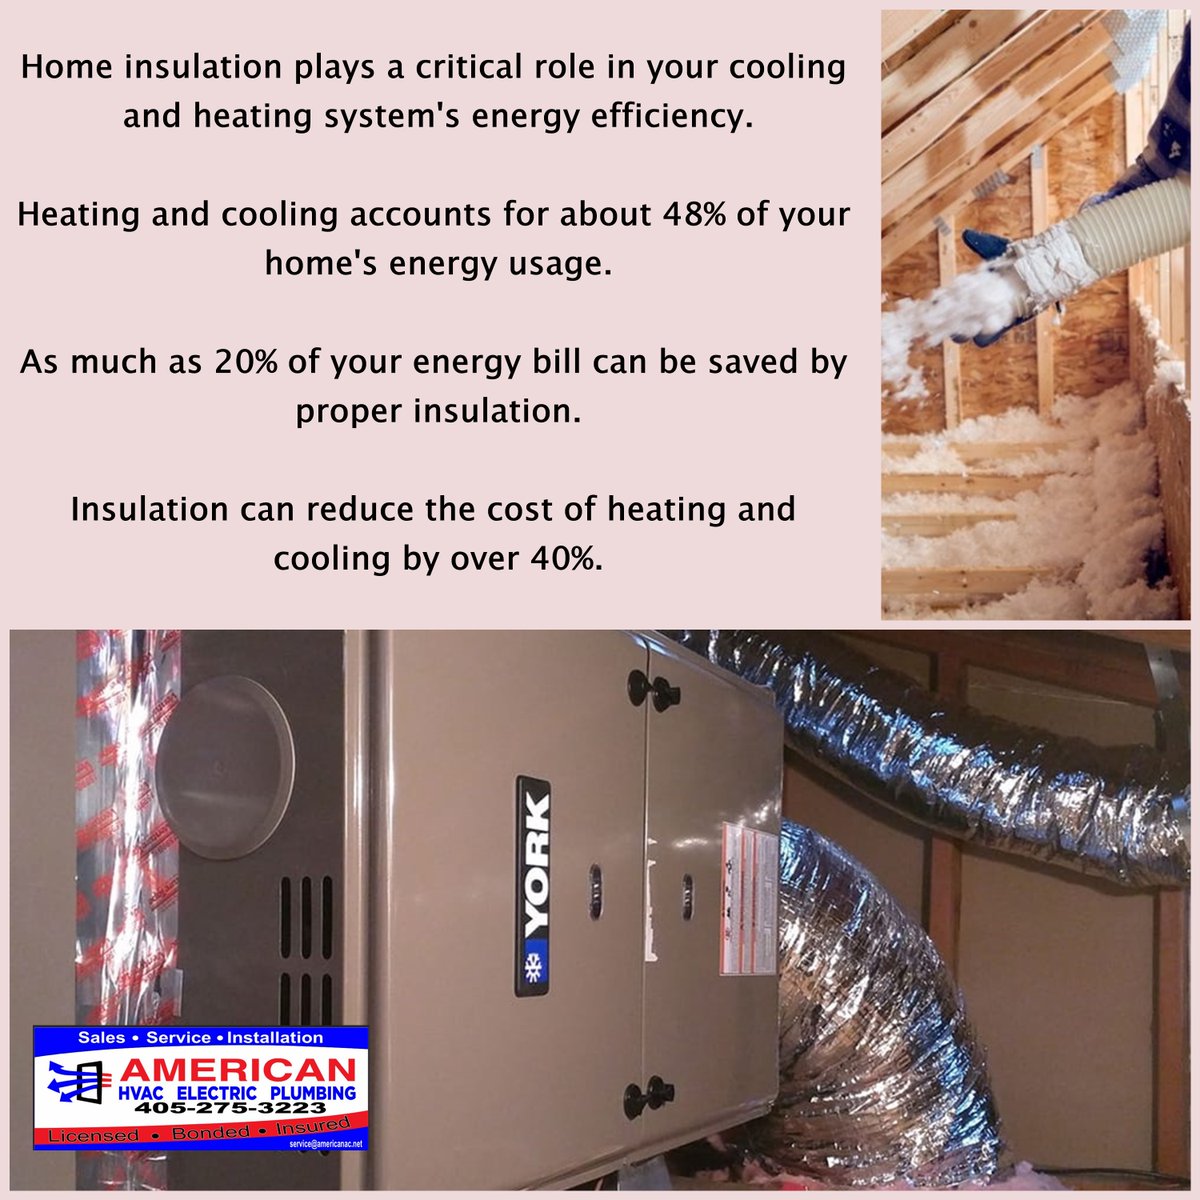 #heatingbill #insulation #energyusage #savemoney #loweryourelectricbill #energysavingtips #properinsulation